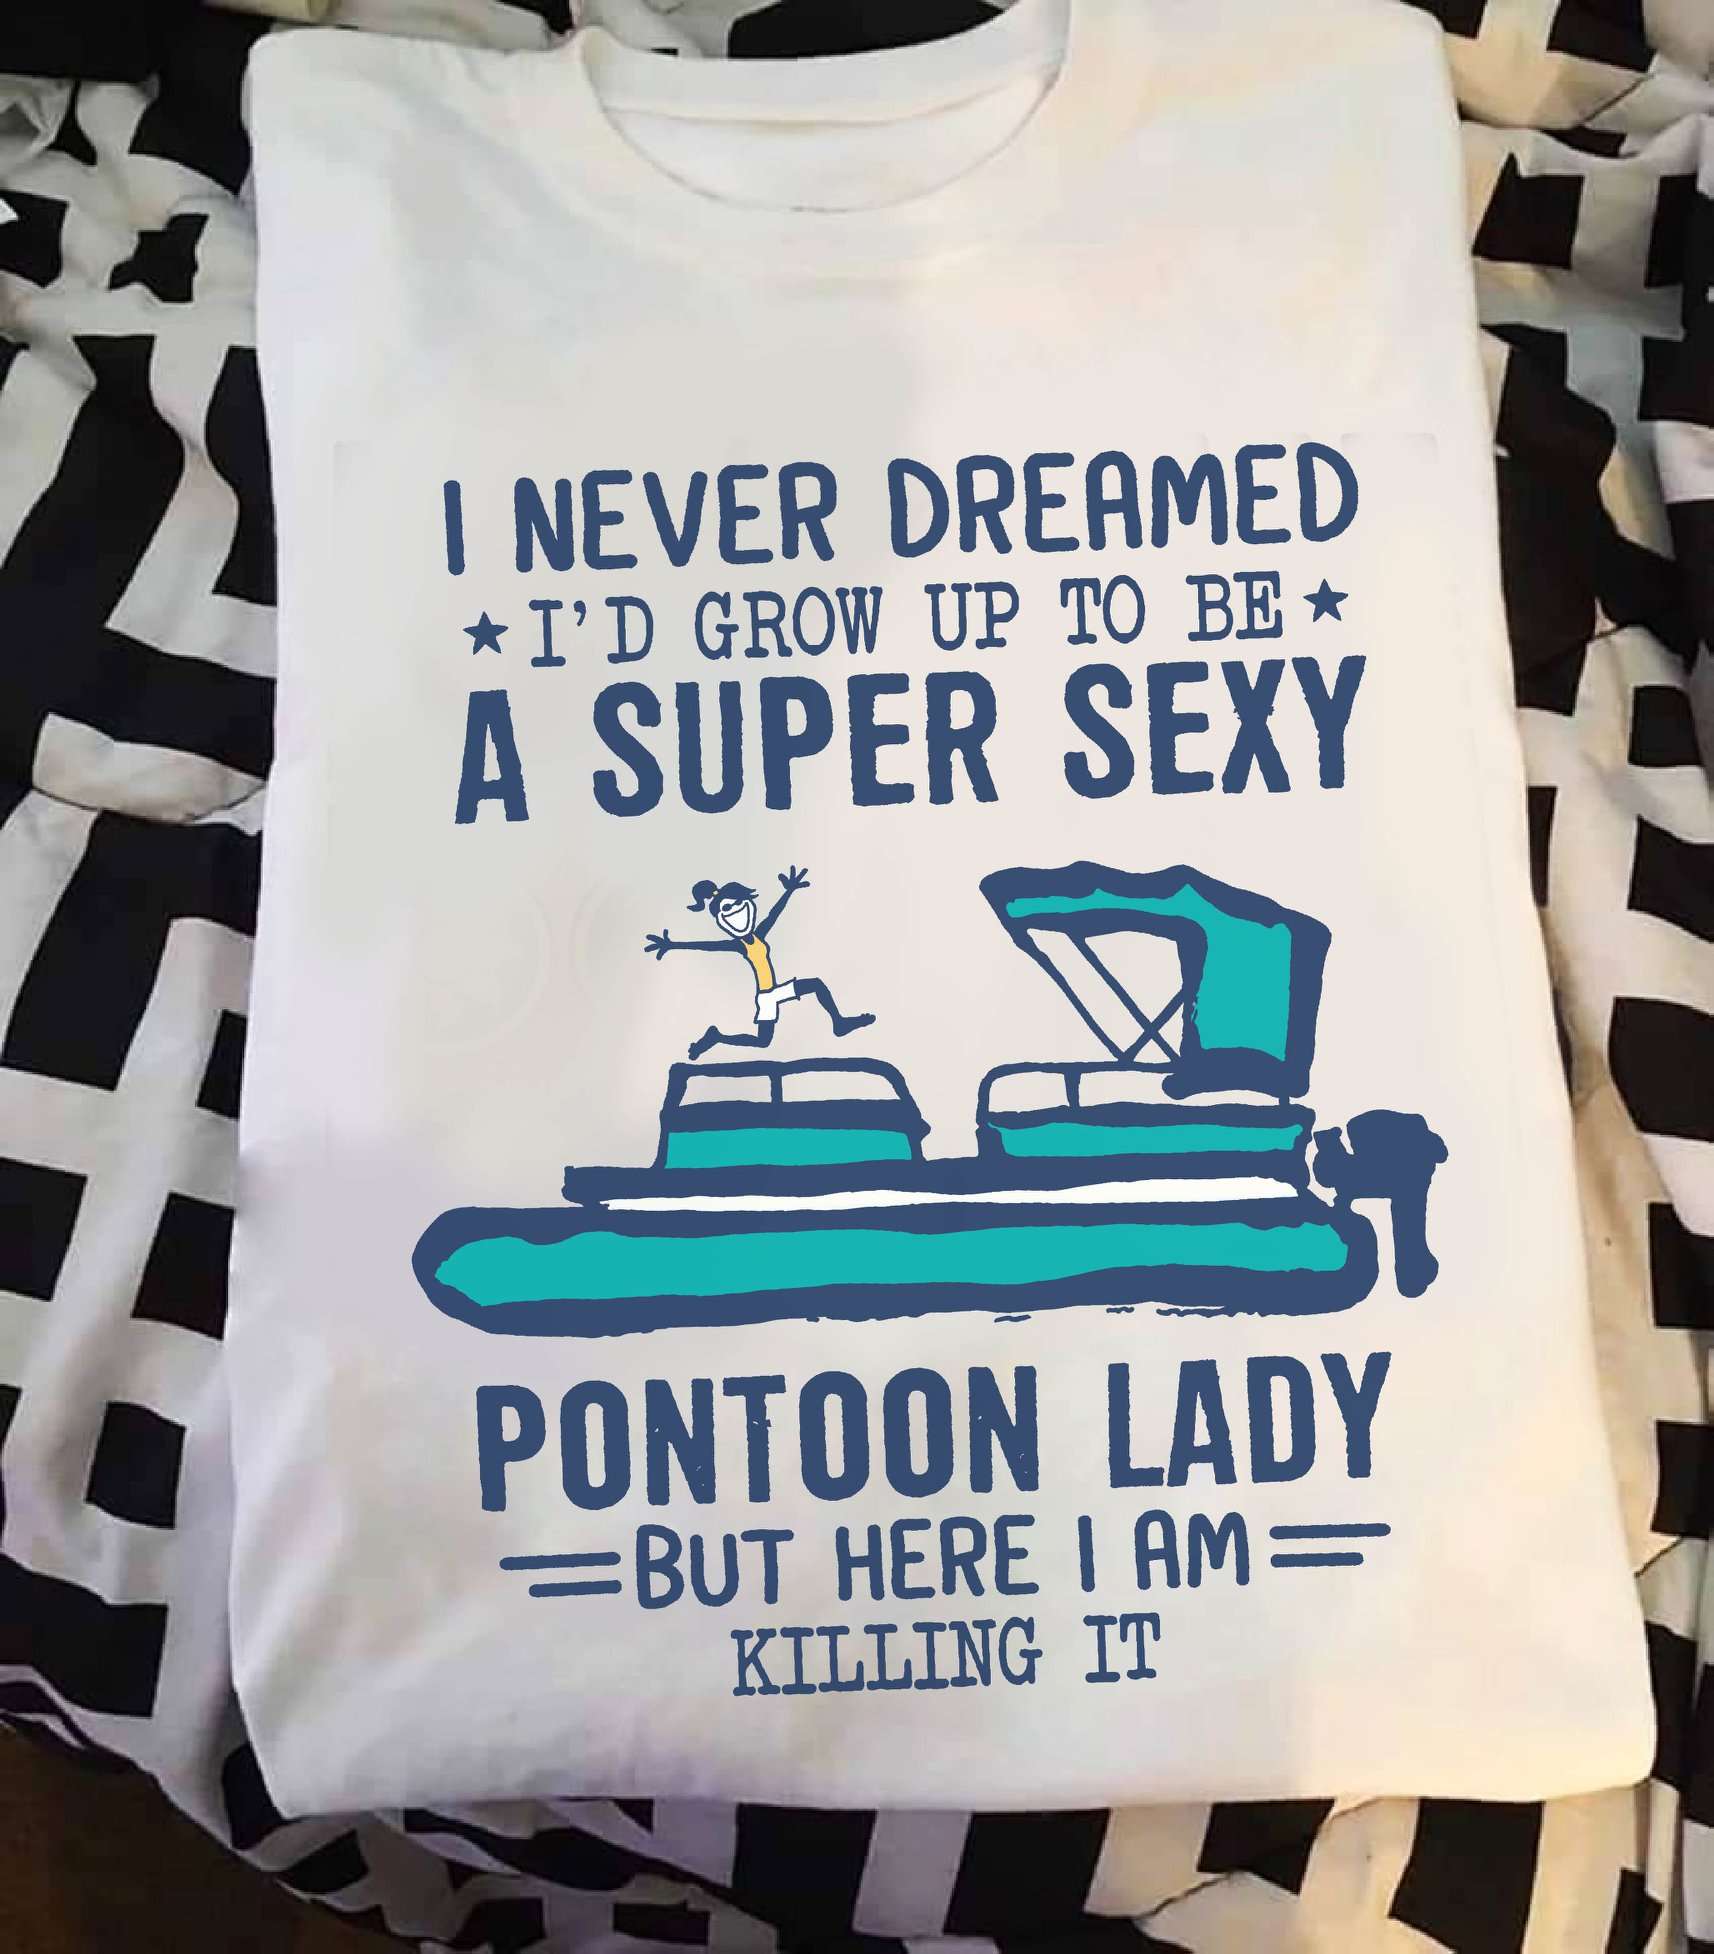 I never dreamed I'd grow up to be a Super sexy pontoon lady - Lady love pontooning, pontooning the hobby